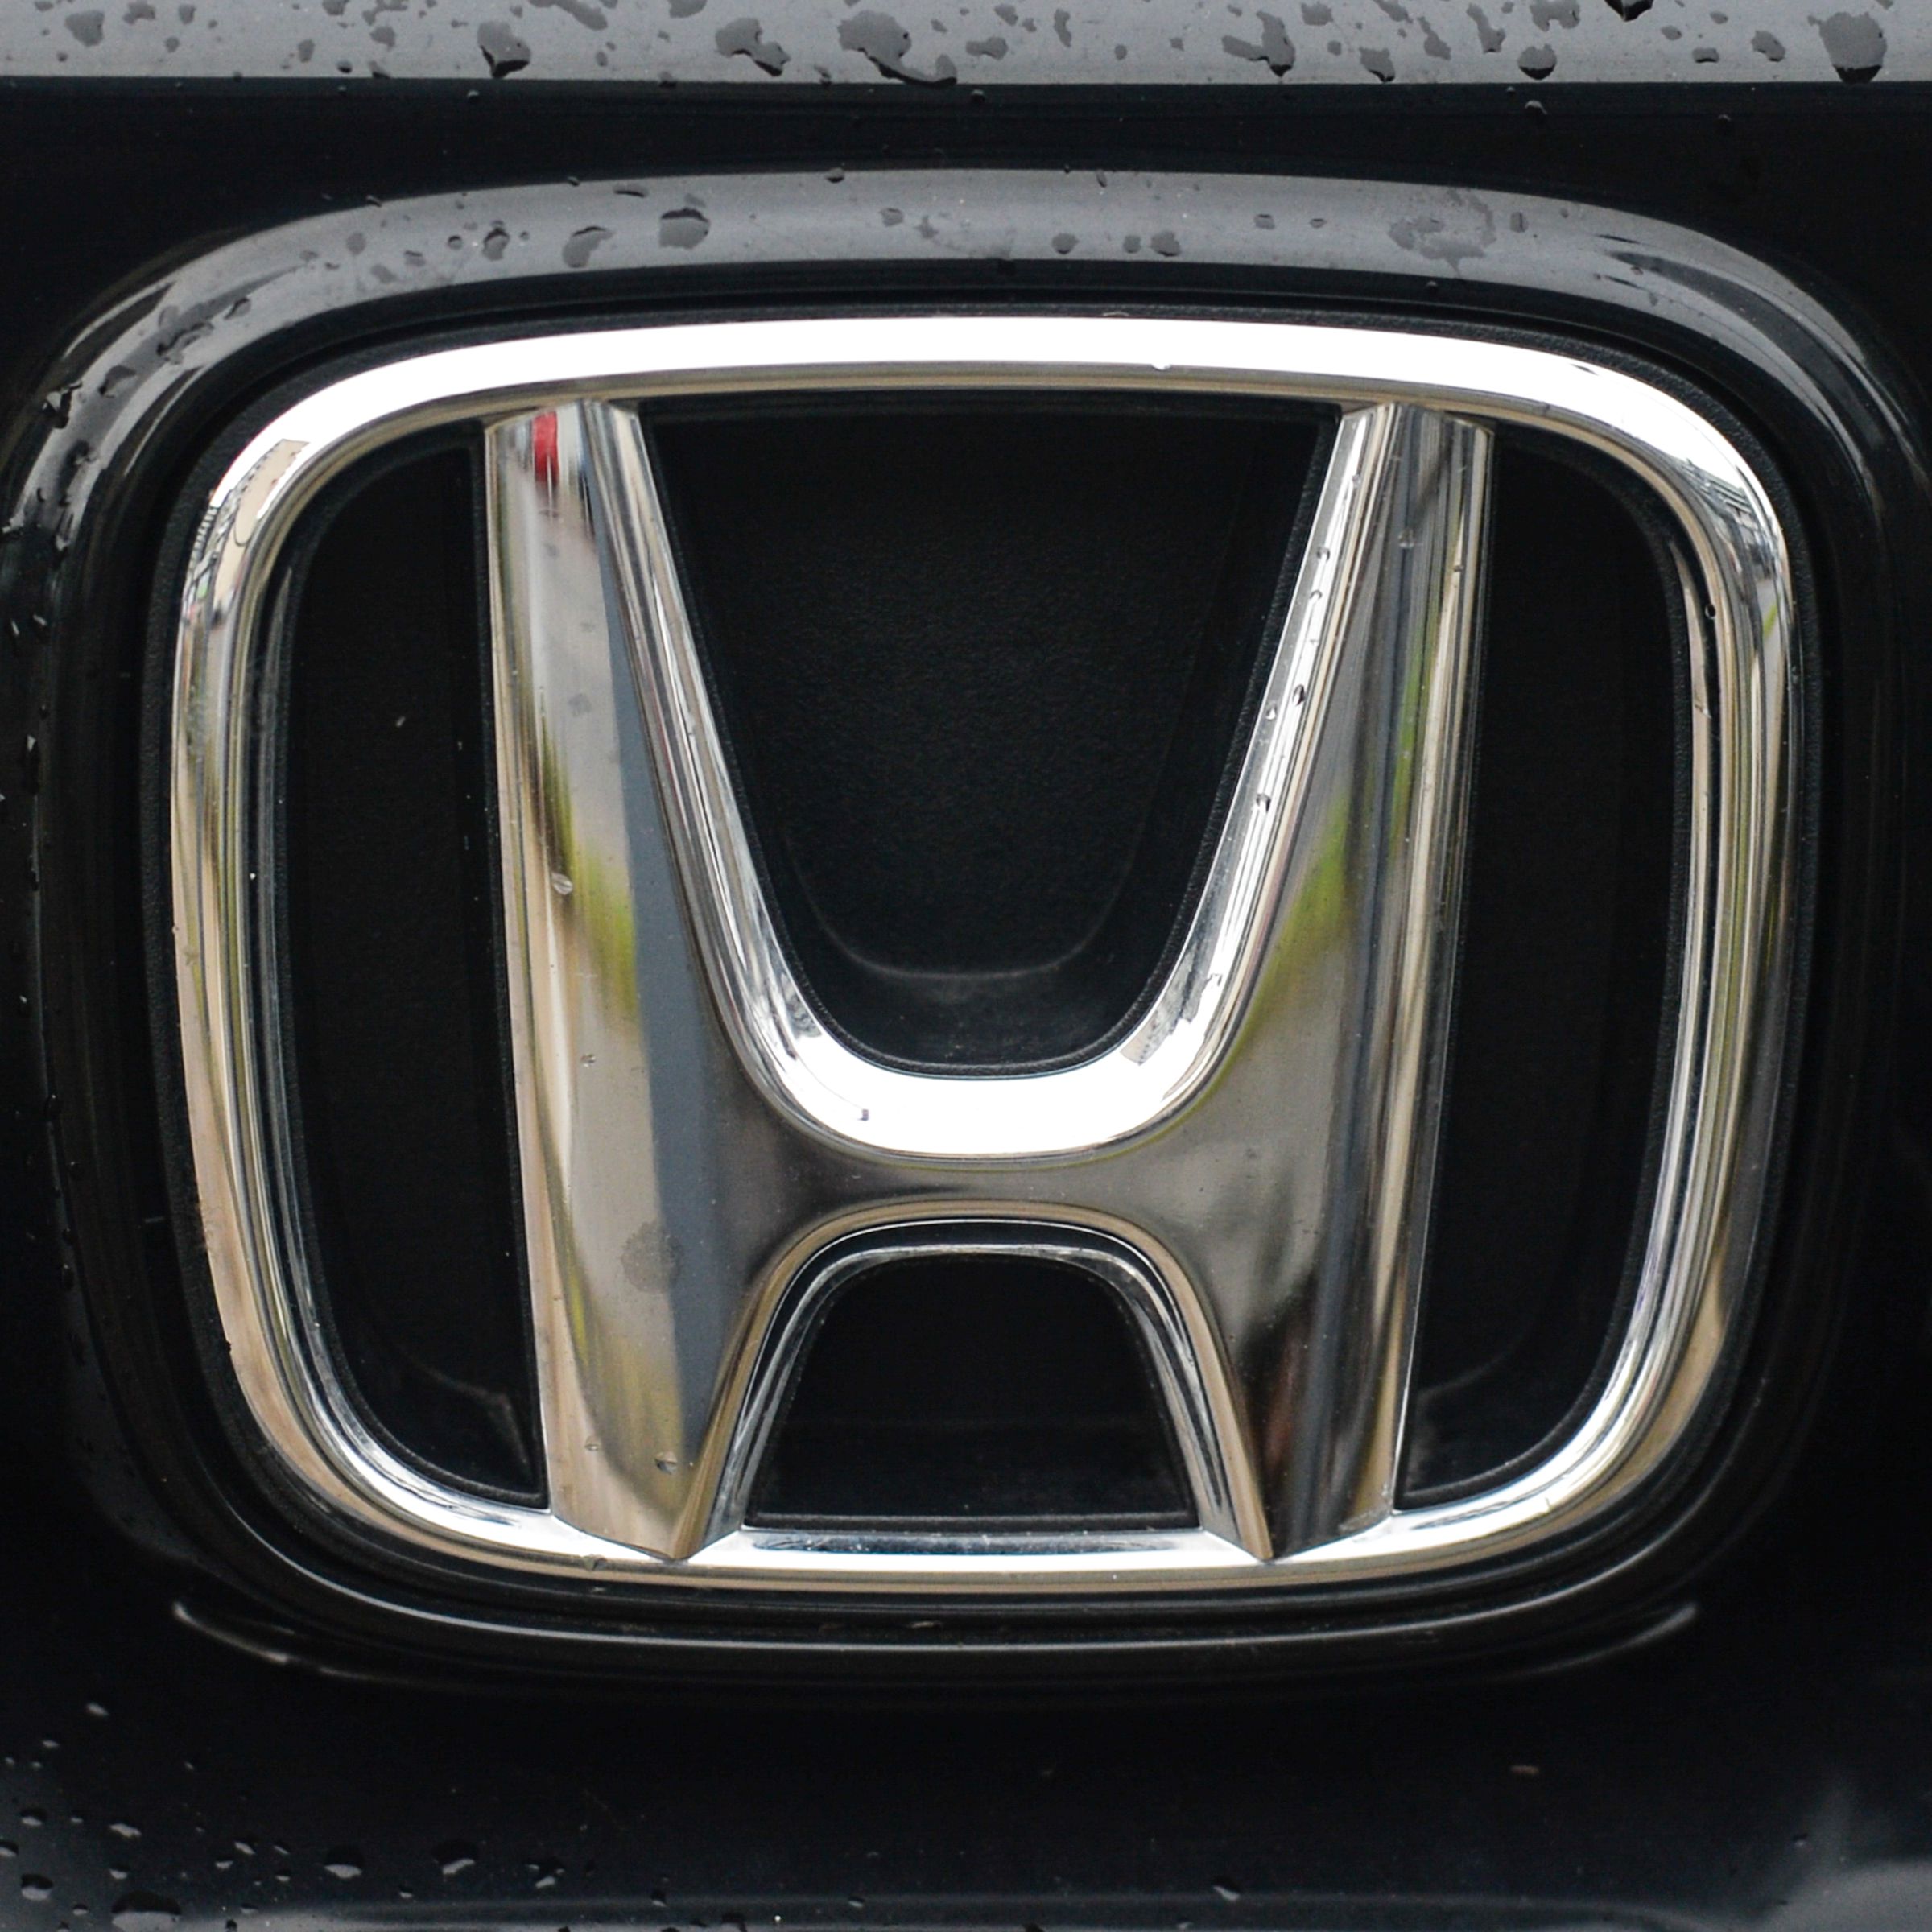 Honda moves toward more EVs